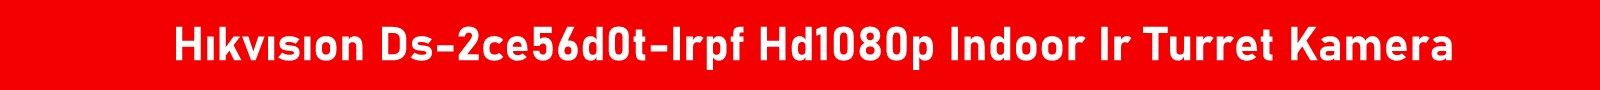 Hikvision Ds 2ce56d0t Irpf Hd 1080p Indoor Ir Turret Kamera